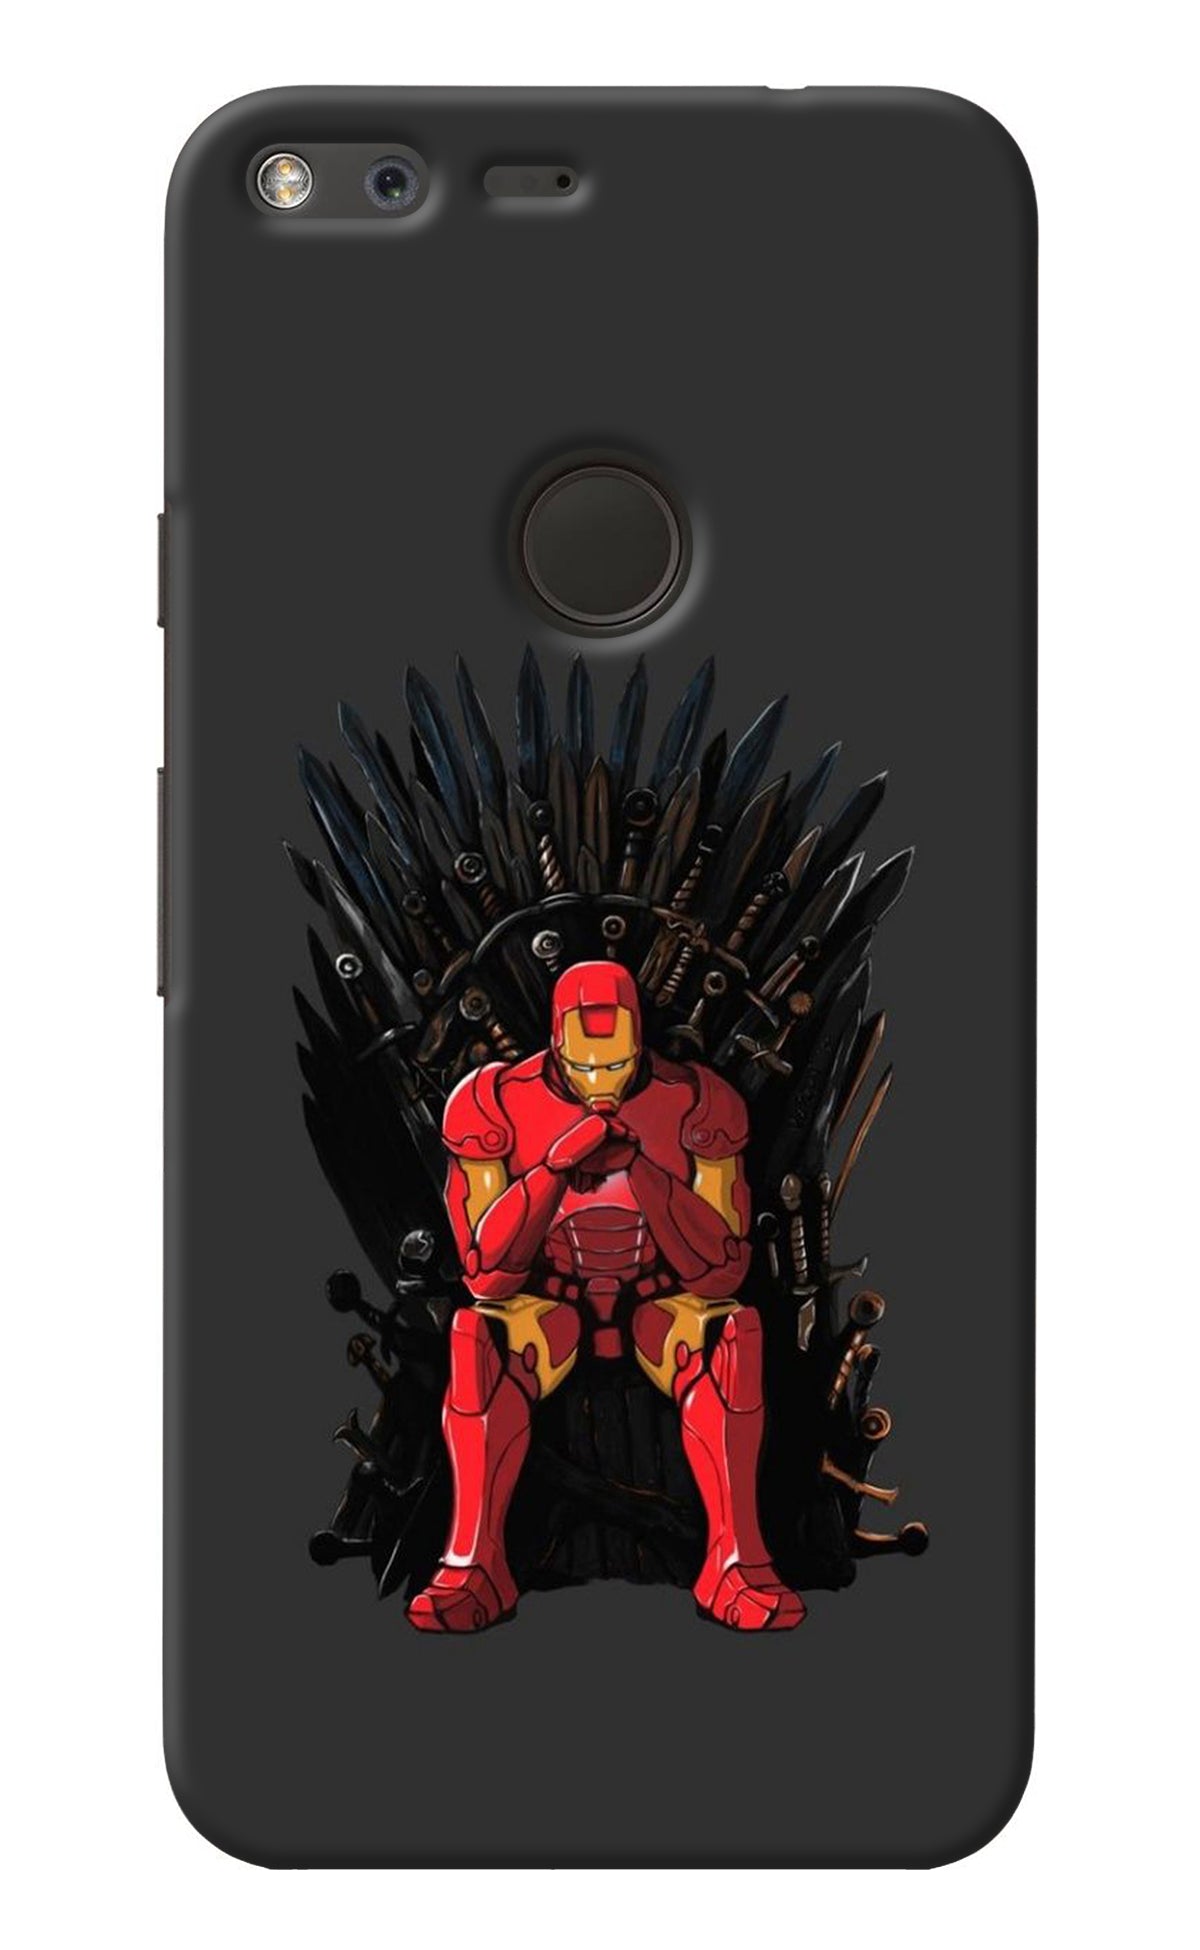 Ironman Throne Google Pixel XL Back Cover